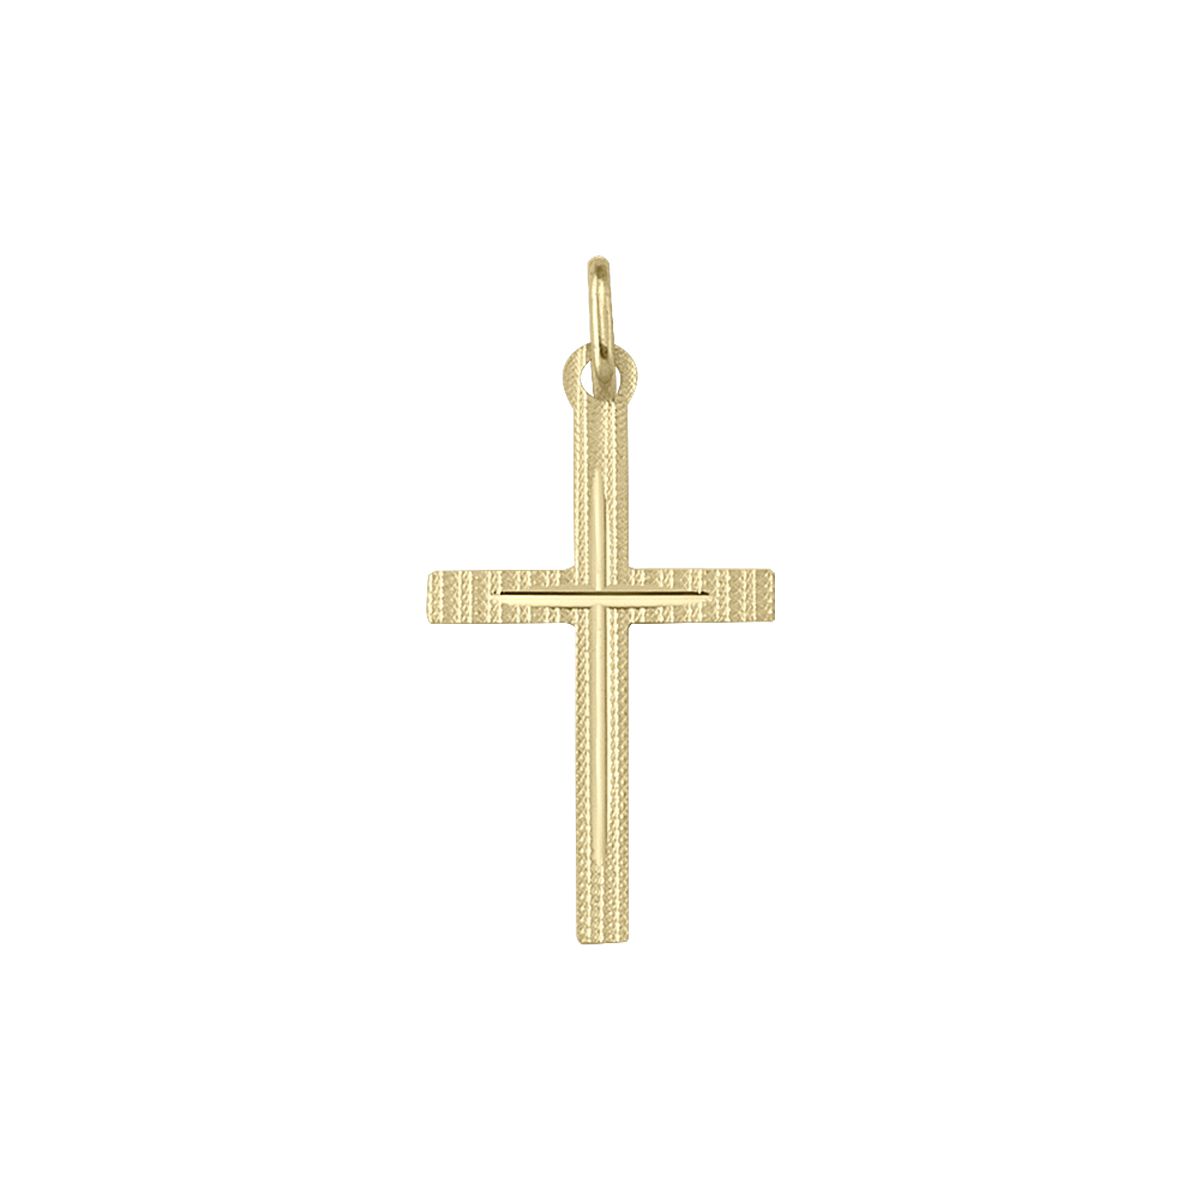 X0403, Gold Cross, Patterned Design